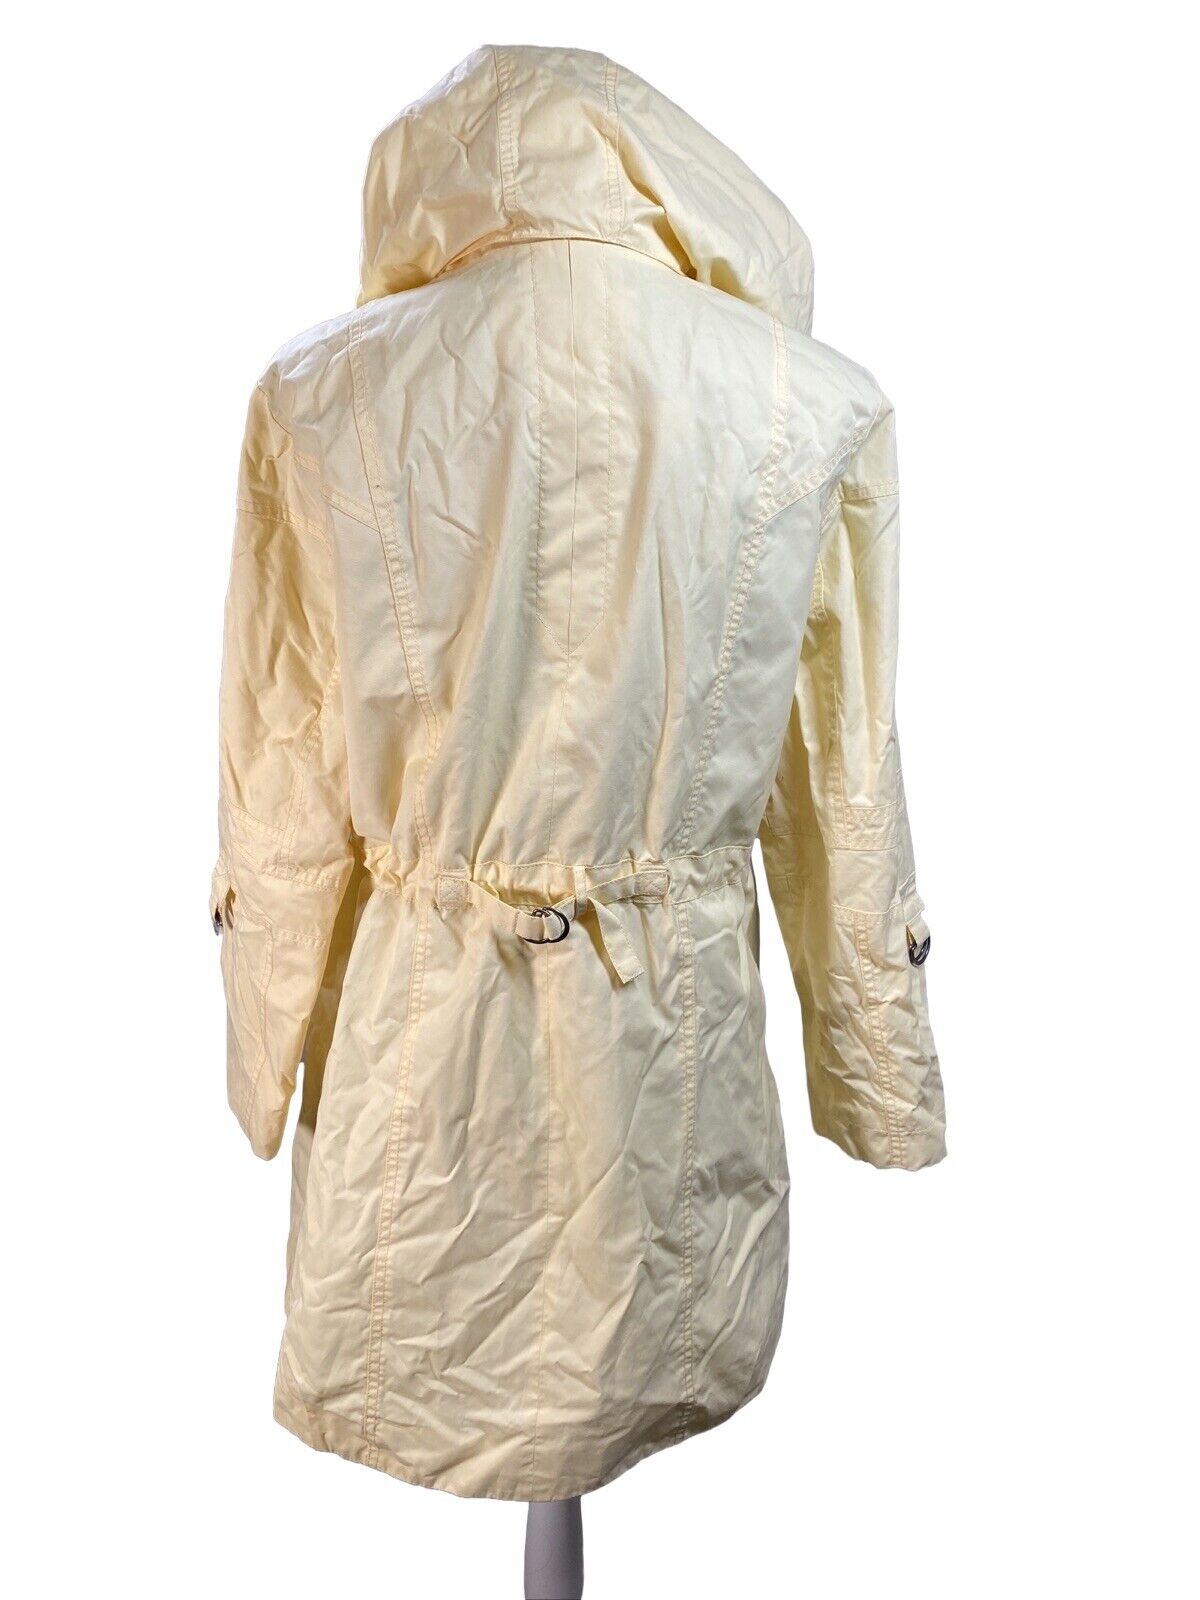 Coldwater Creek Women's Yellow Hooded Nylon Blend Button Up Jacket Sz L